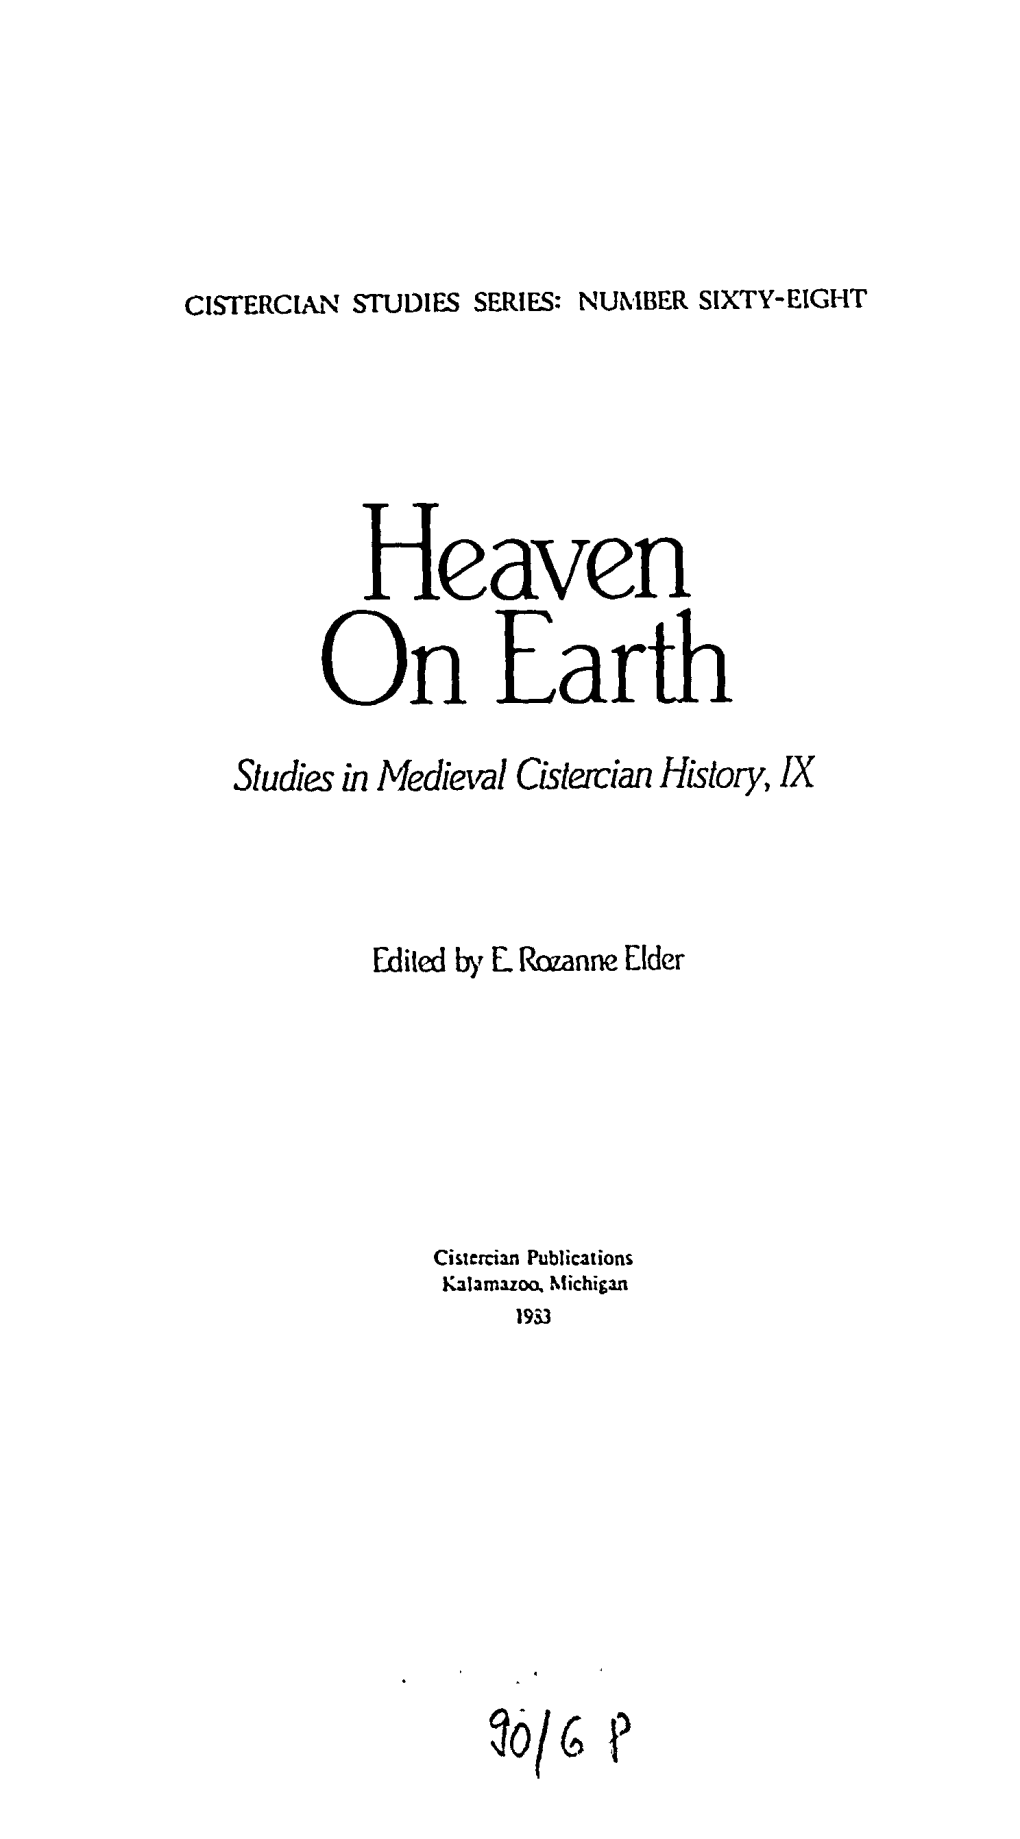 Studies in Medieval Cistercian History, IX